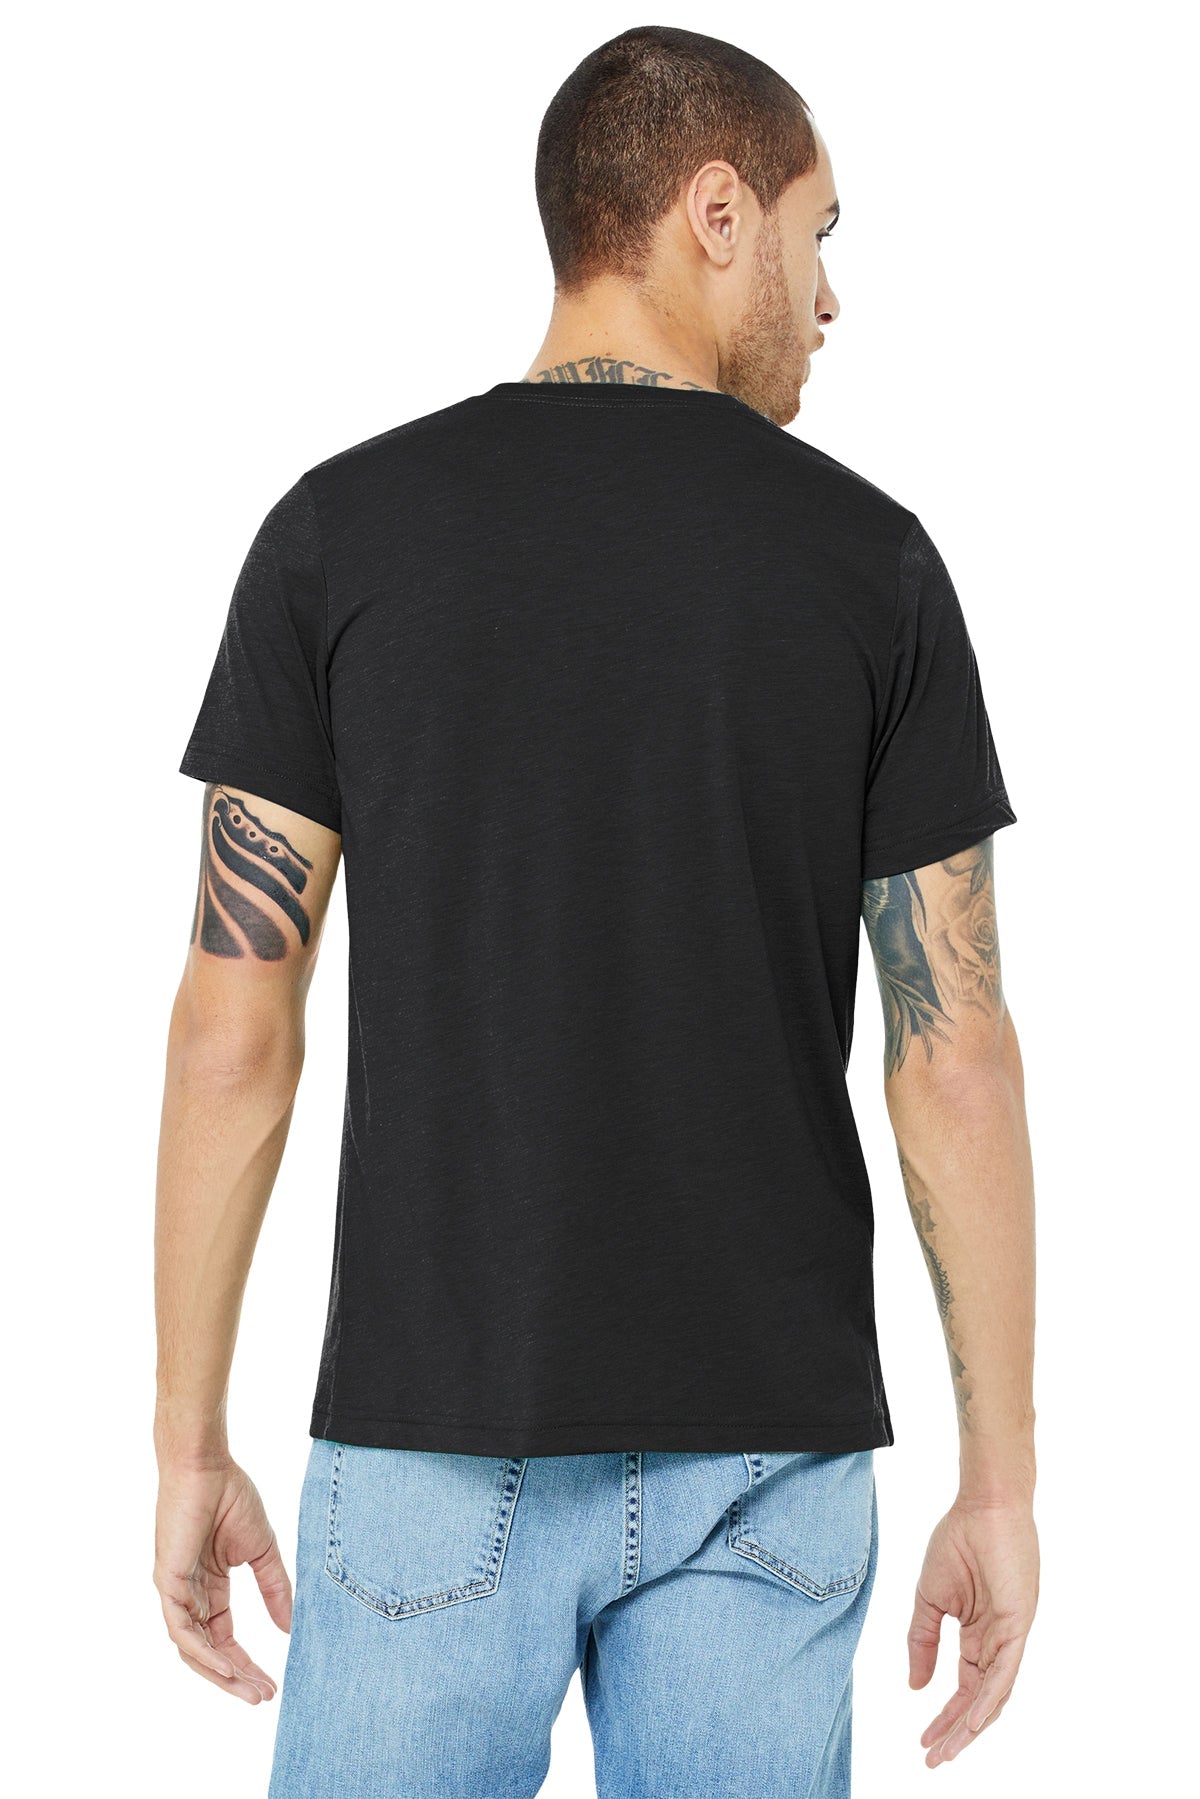 bella + canvas unisex triblend short sleeve t-shirt 3413c sd dark gry trbl